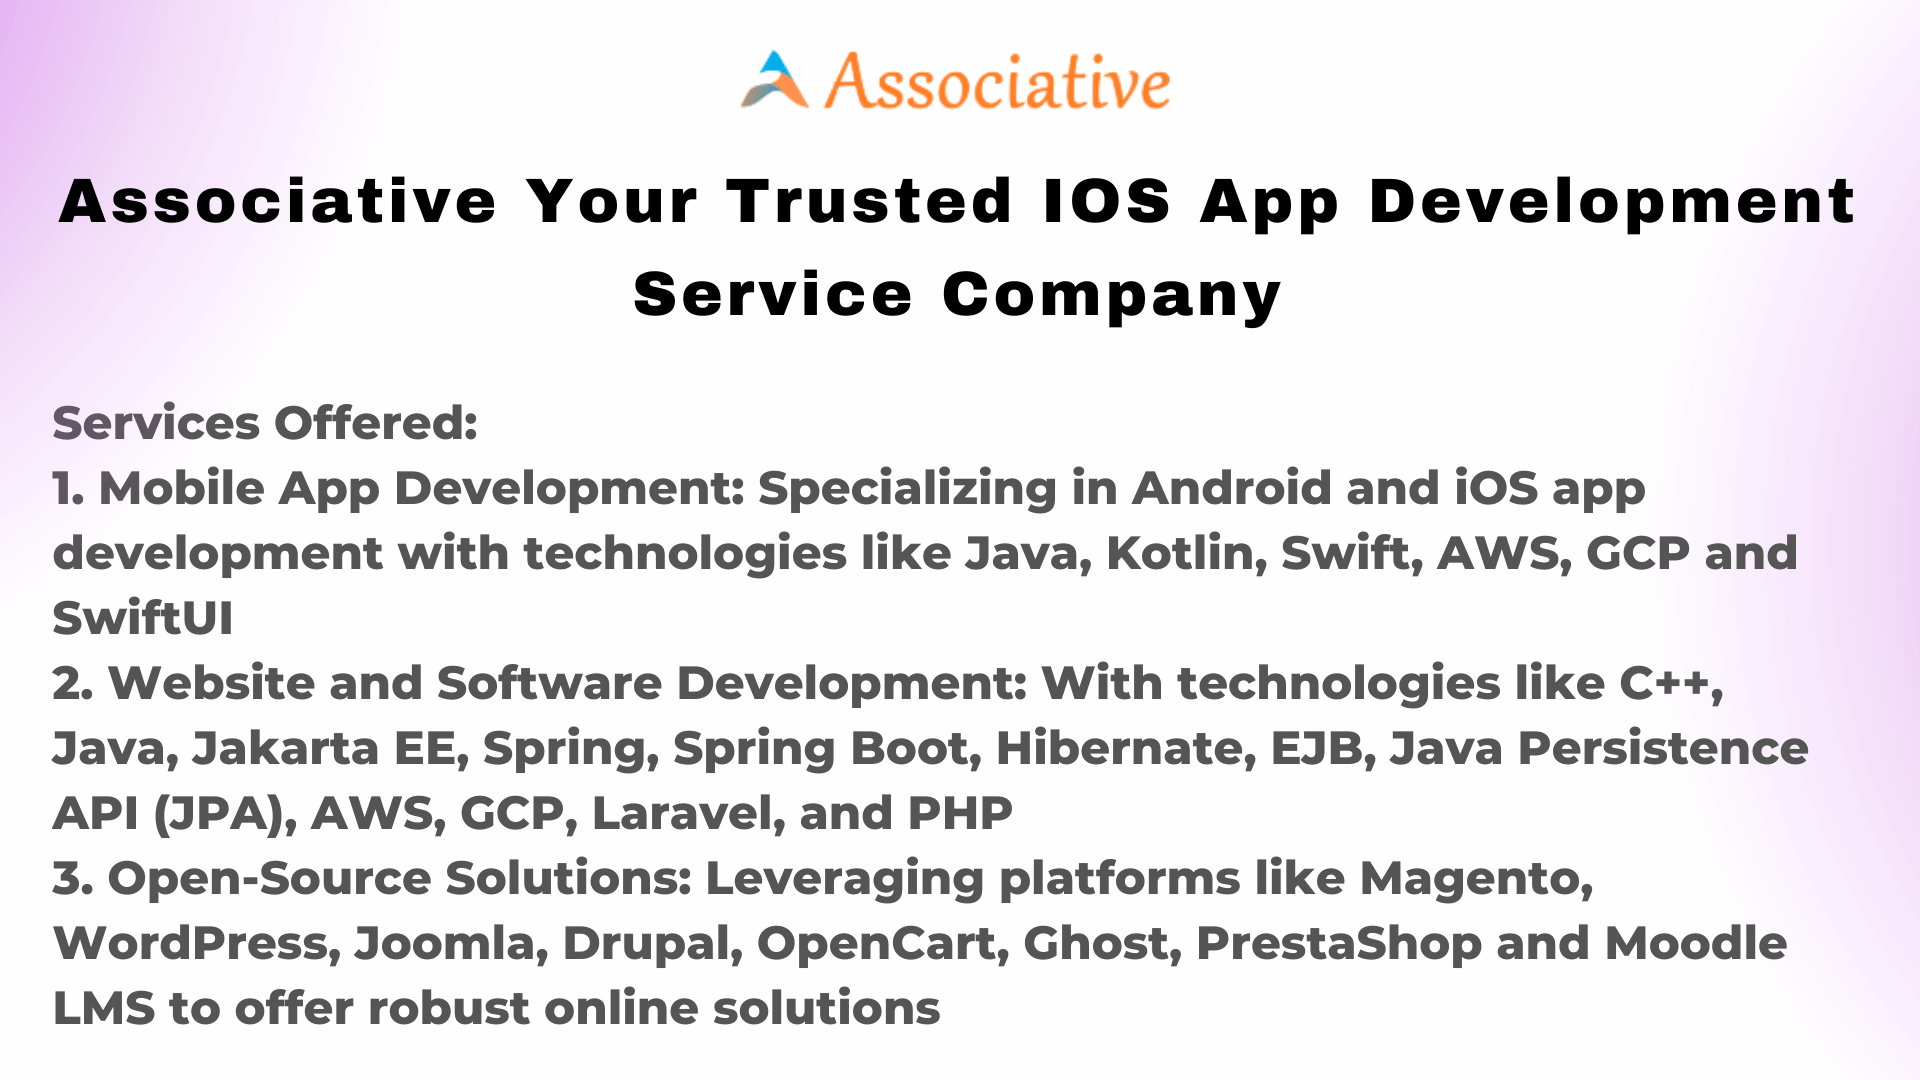 Associative Your Trusted iOS App Development Service Company